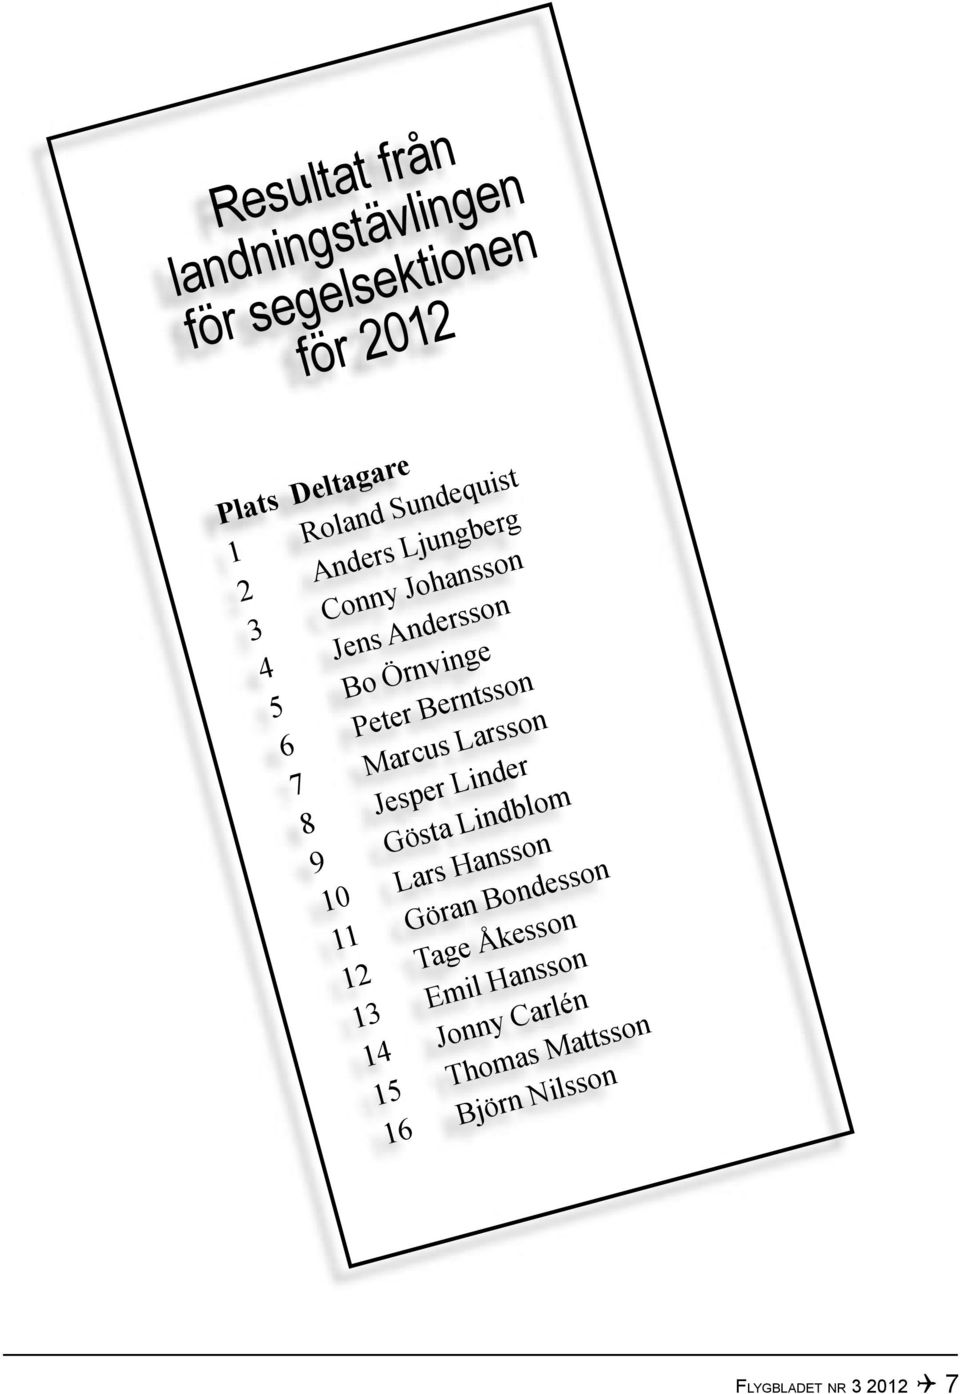 Berntsson 7 Marcus Larsson 8 Jesper Linder 9 Gösta Lindblom 10 Lars Hansson 11 Göran